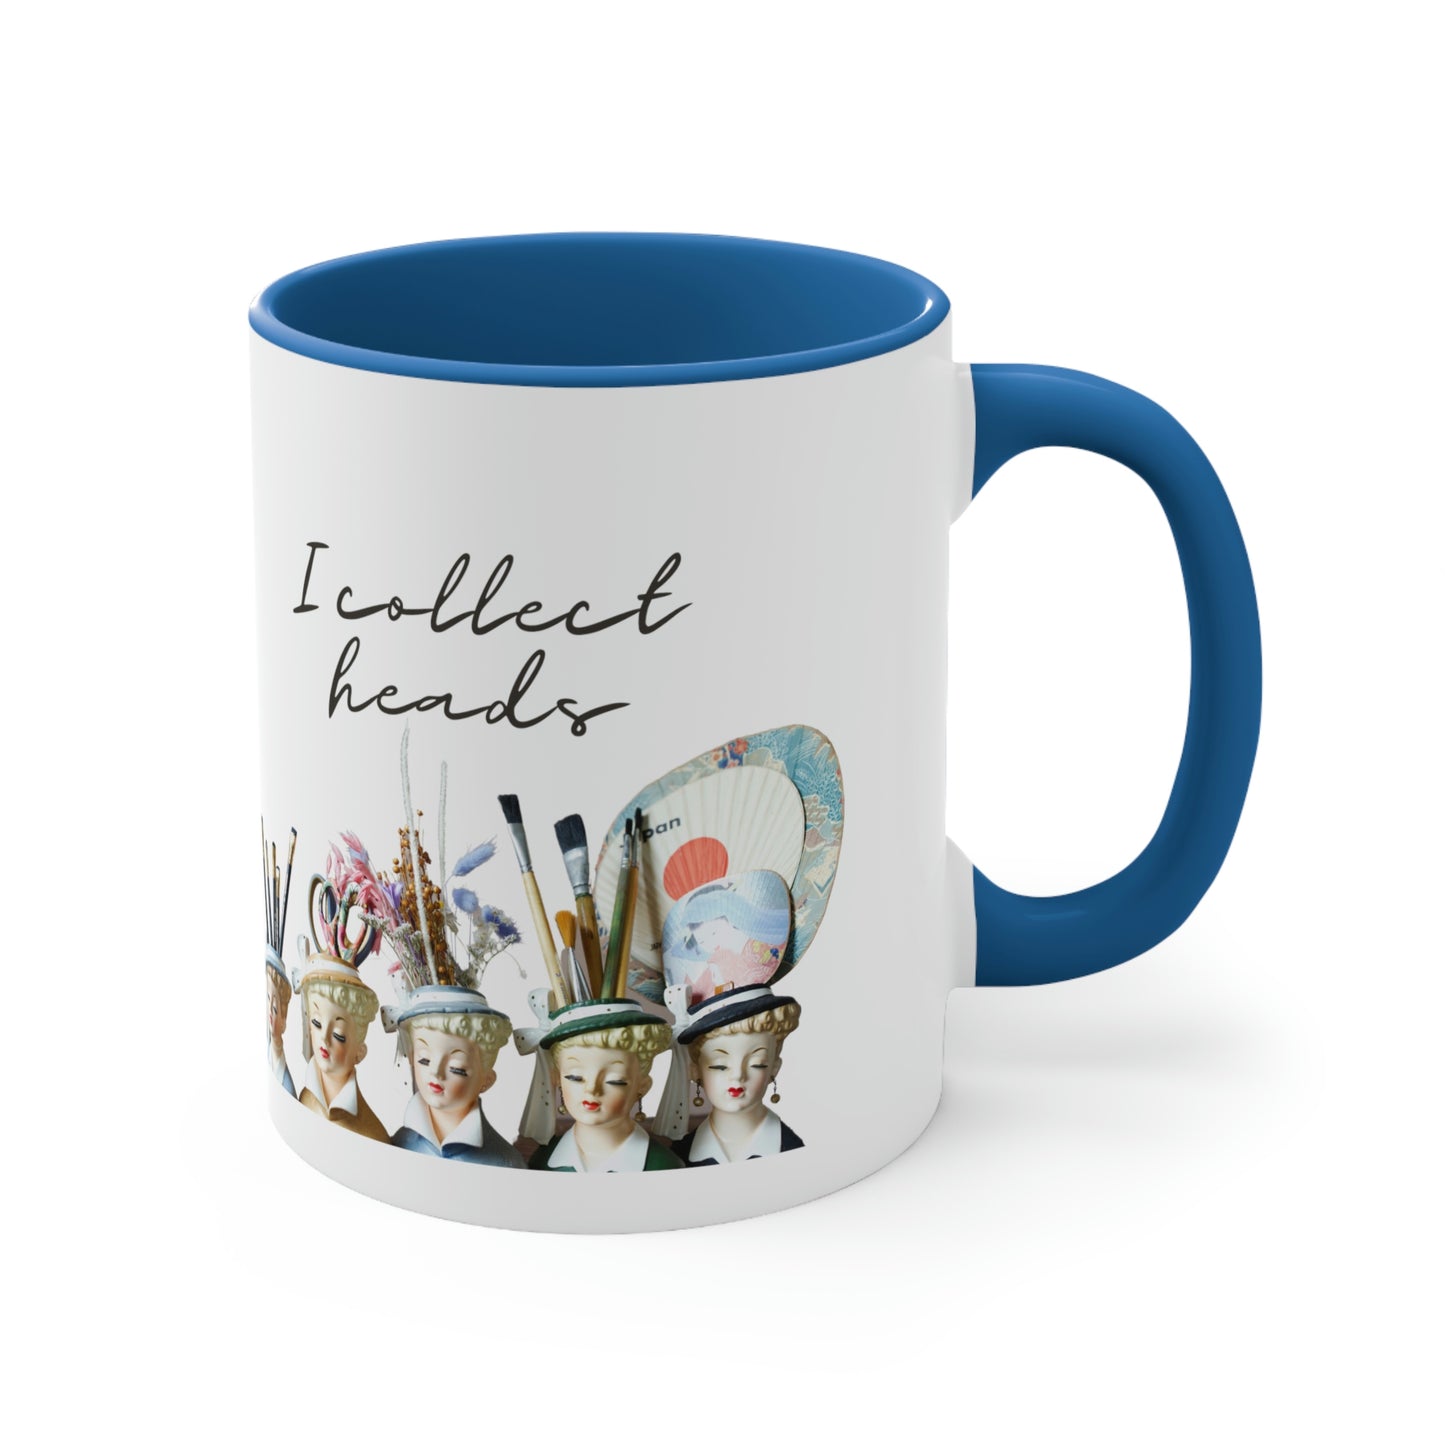 Lady Head Vase- Coffee Cup - Head Vase Collector- Accent Coffee Mug, 11oz